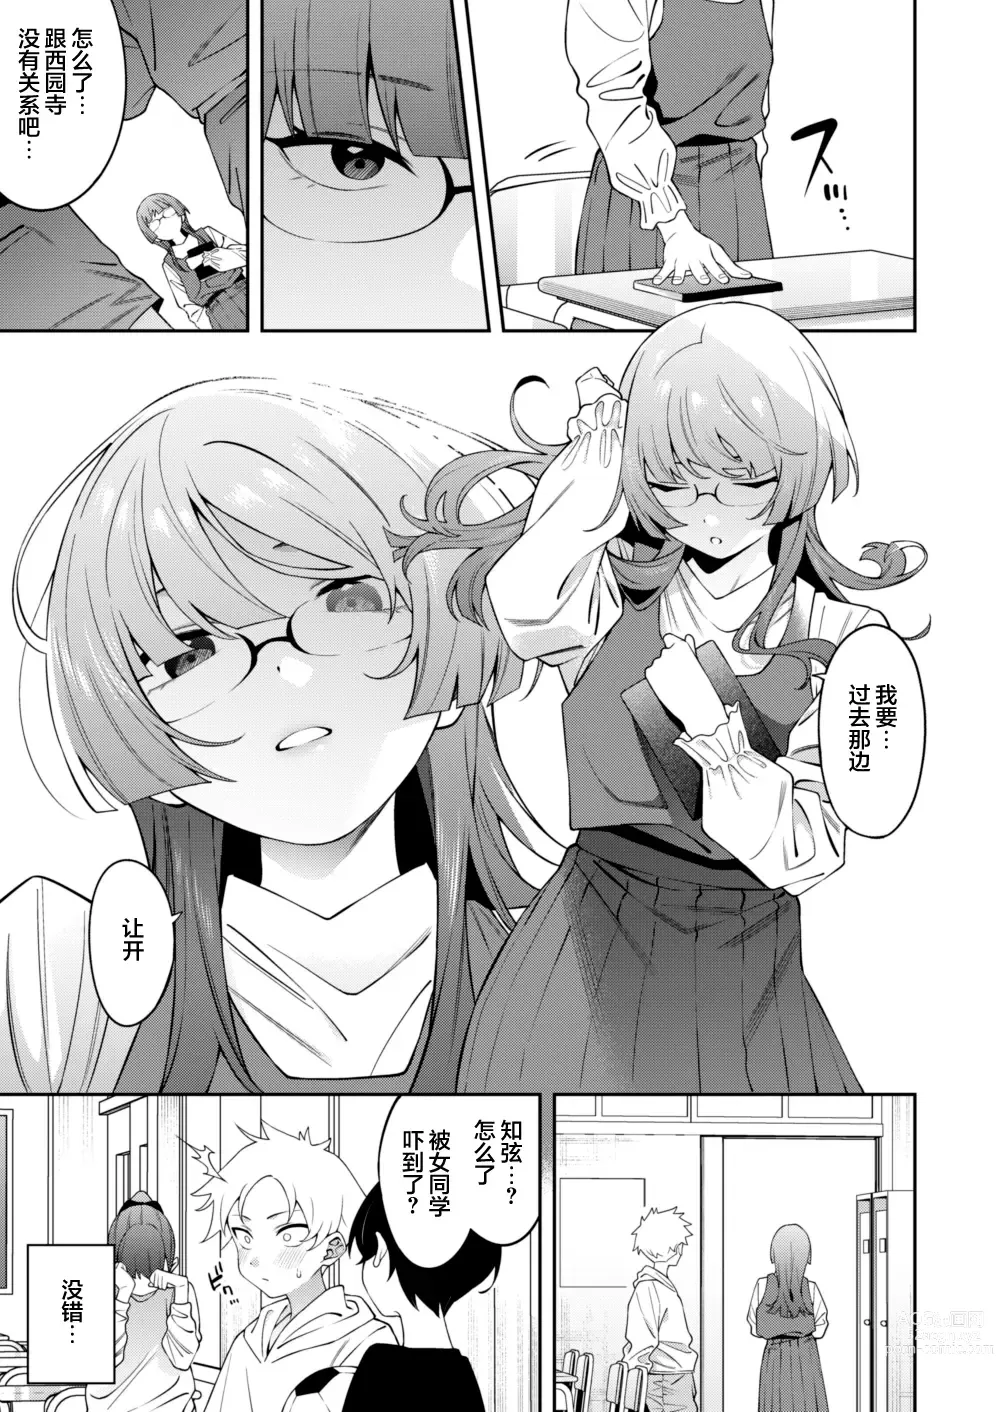 Page 4 of doujinshi Sumire-chan ha atama ga ii.